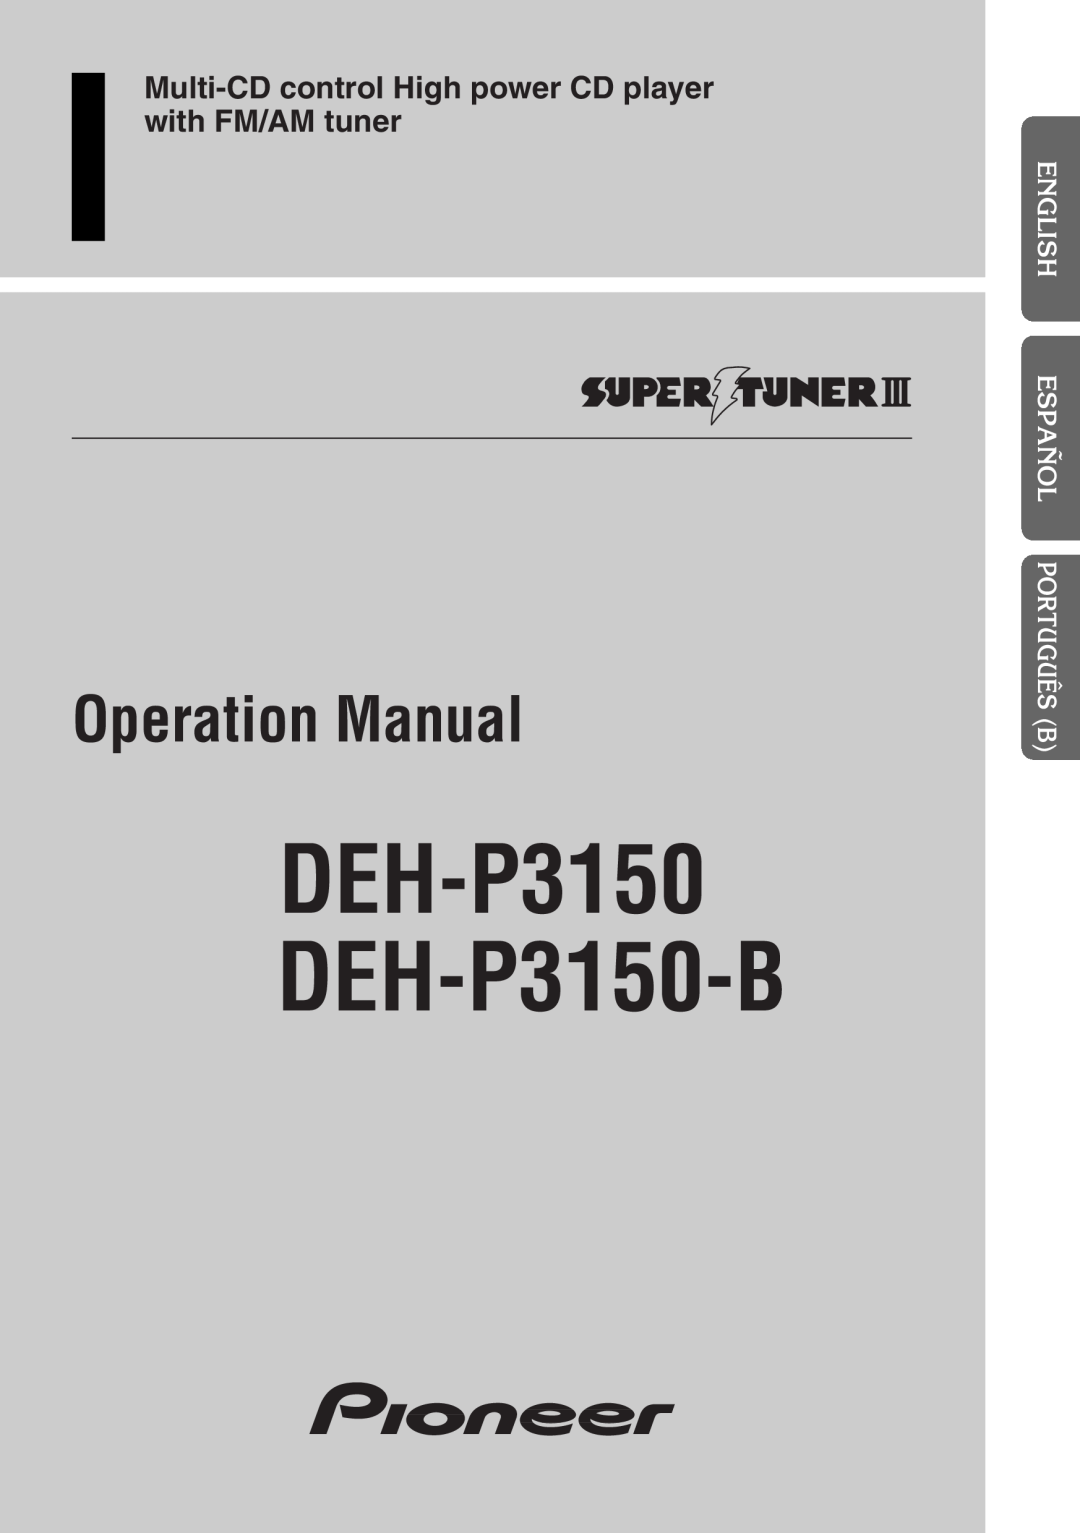 Pioneer operation manual English Español Português B, Nederlands, DEH-P3150 DEH-P3150-B, Operation Manual 